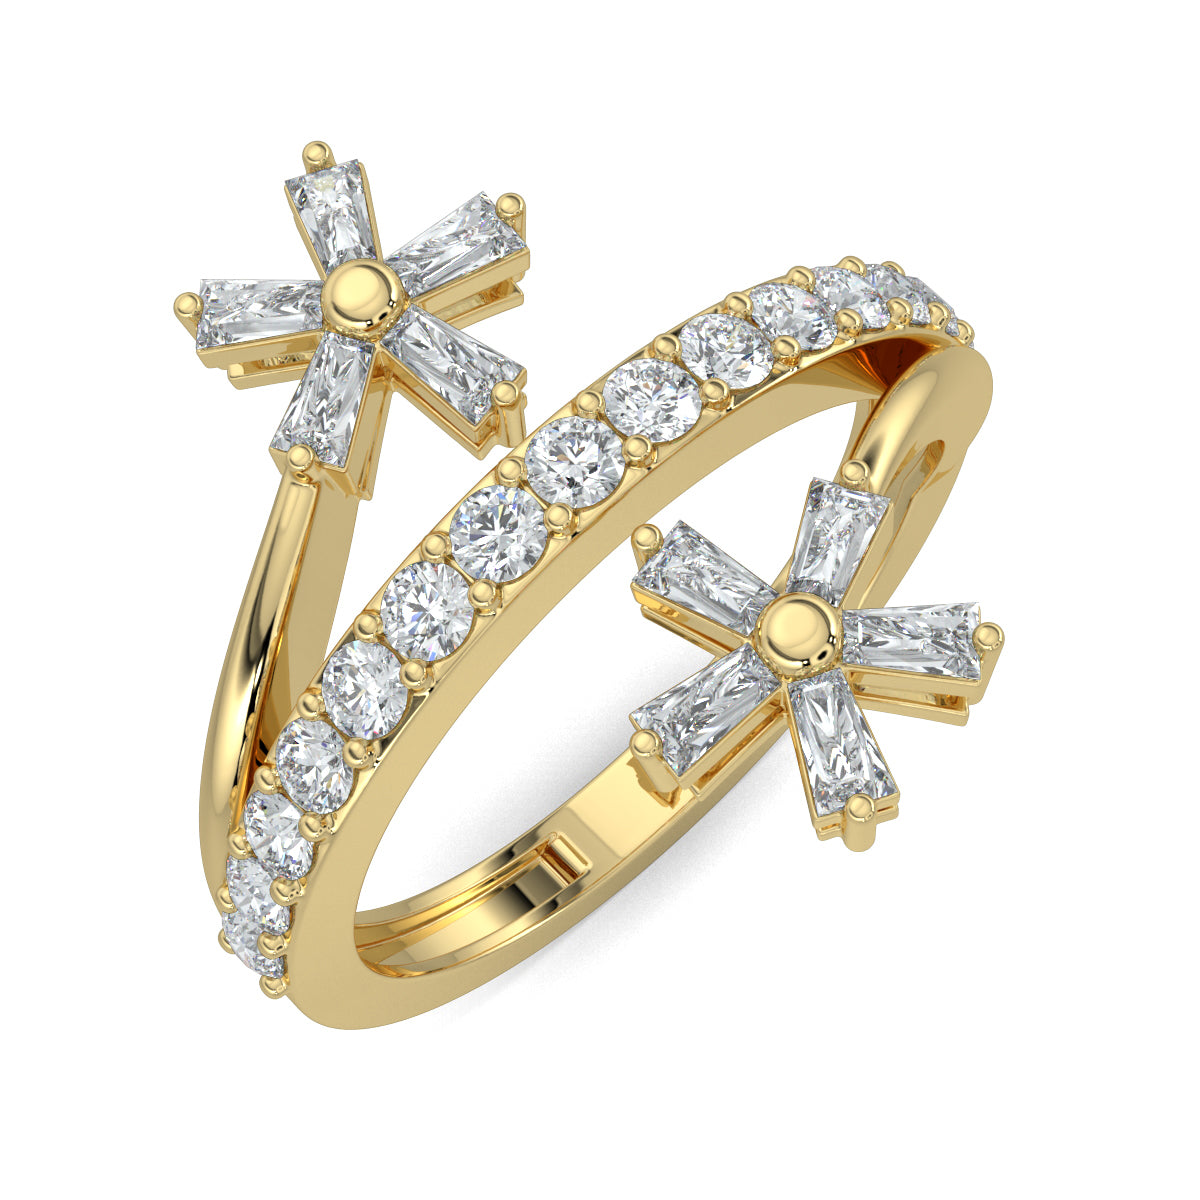 Yellow Gold, Diamond Ring, Natural diamond ring, Lab-grown diamond ring, split shank diamond ring, everyday diamond ring, floral diamond ring, baguette diamond ring, diamond jewelry, luxury ring